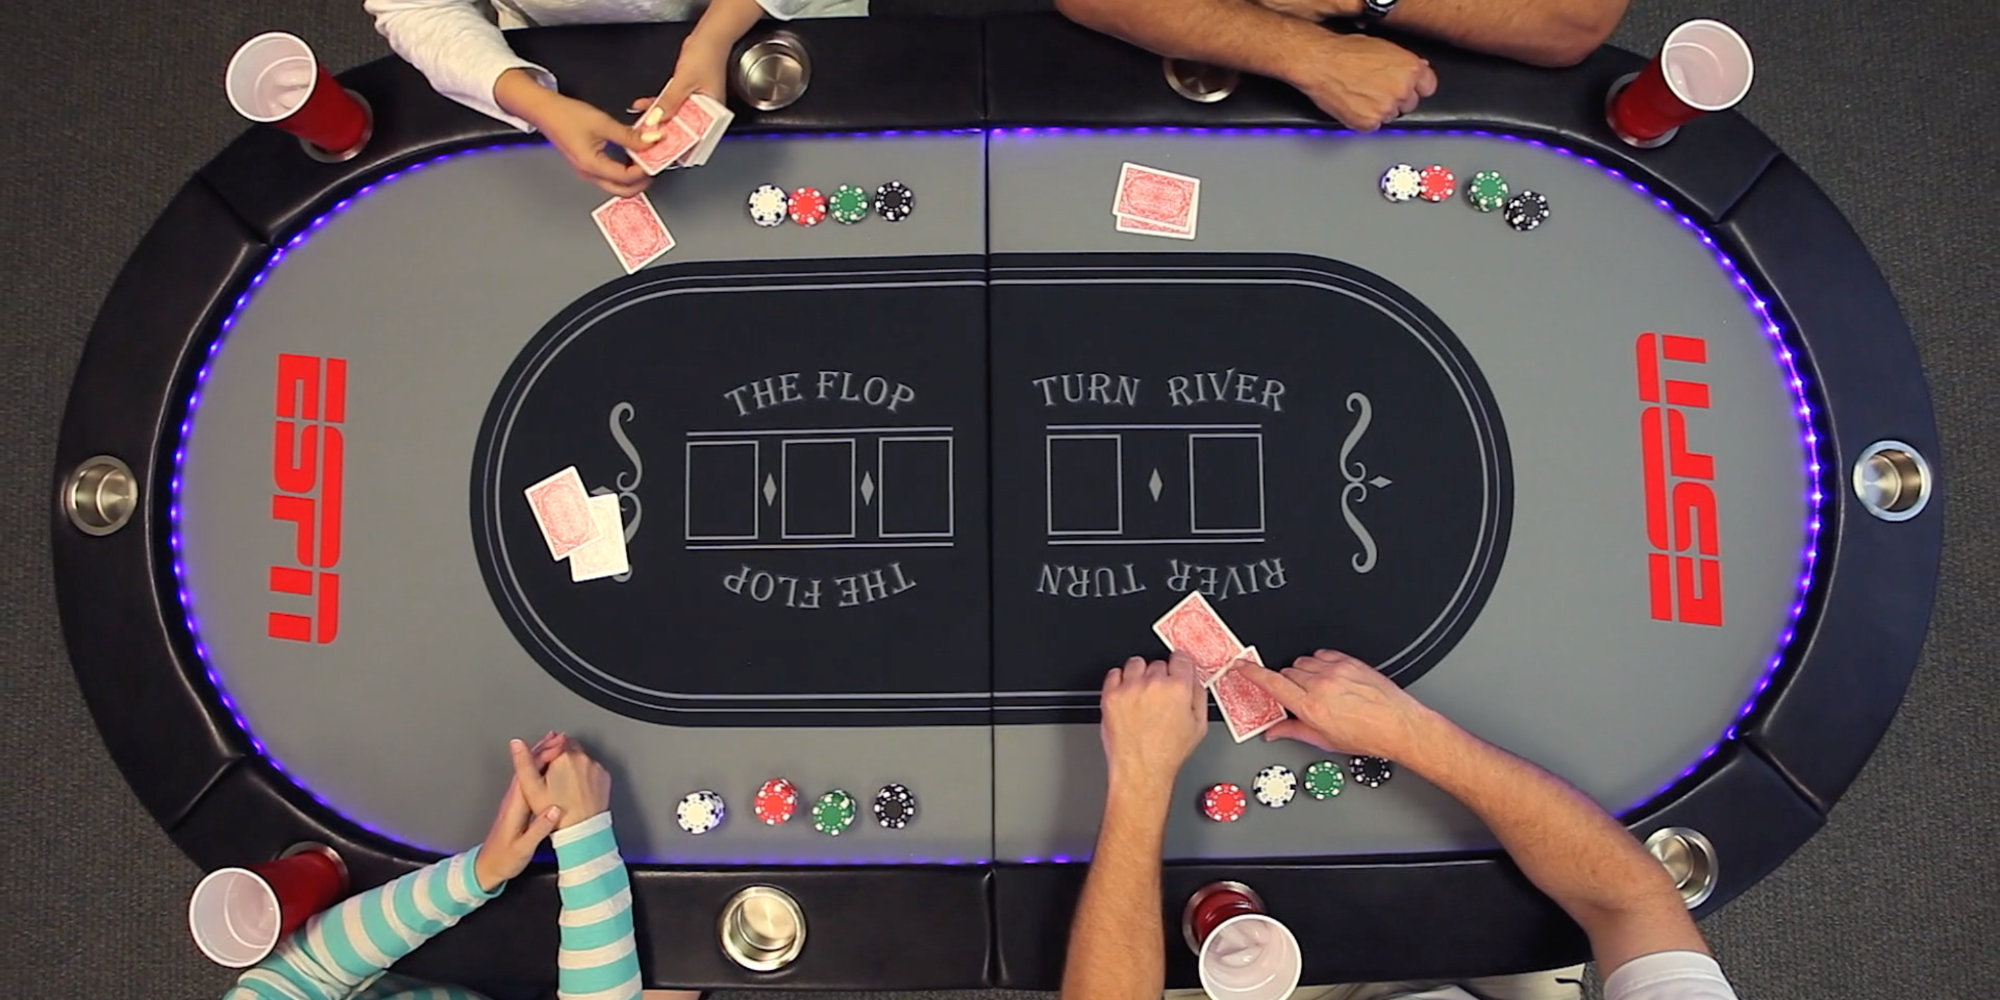 ESPN's Poker Table folds has LED lighting: $160 (Reg. up to $250) - 9to5Toys